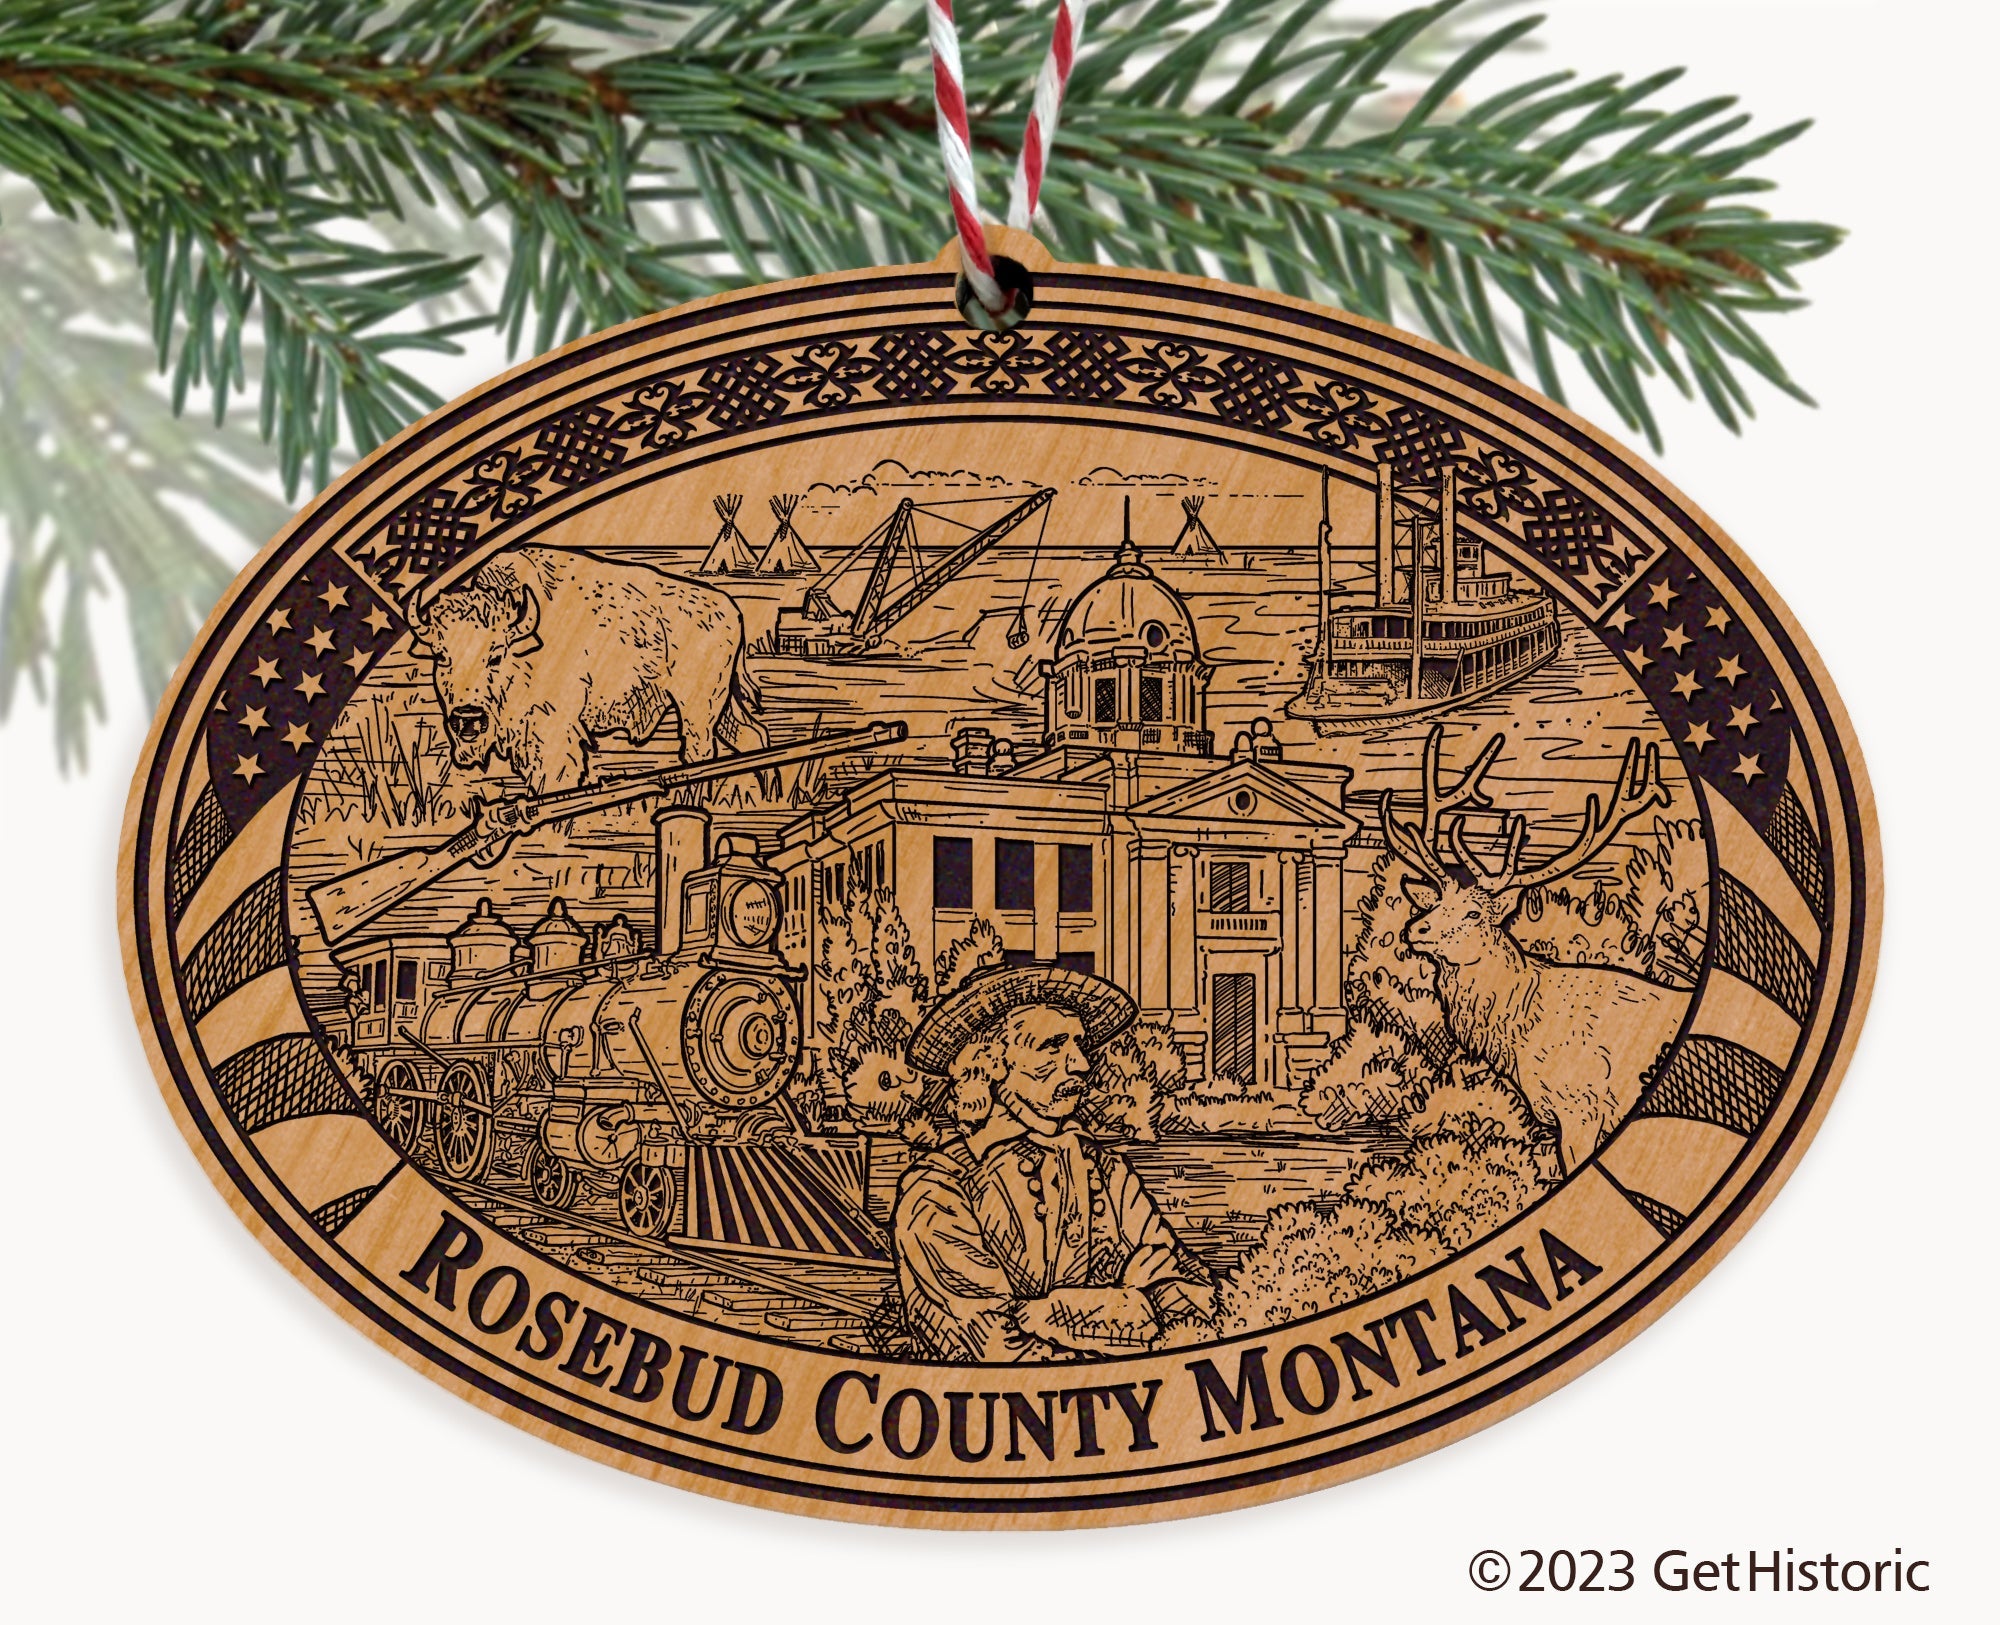 Rosebud County Montana Engraved Natural Ornament